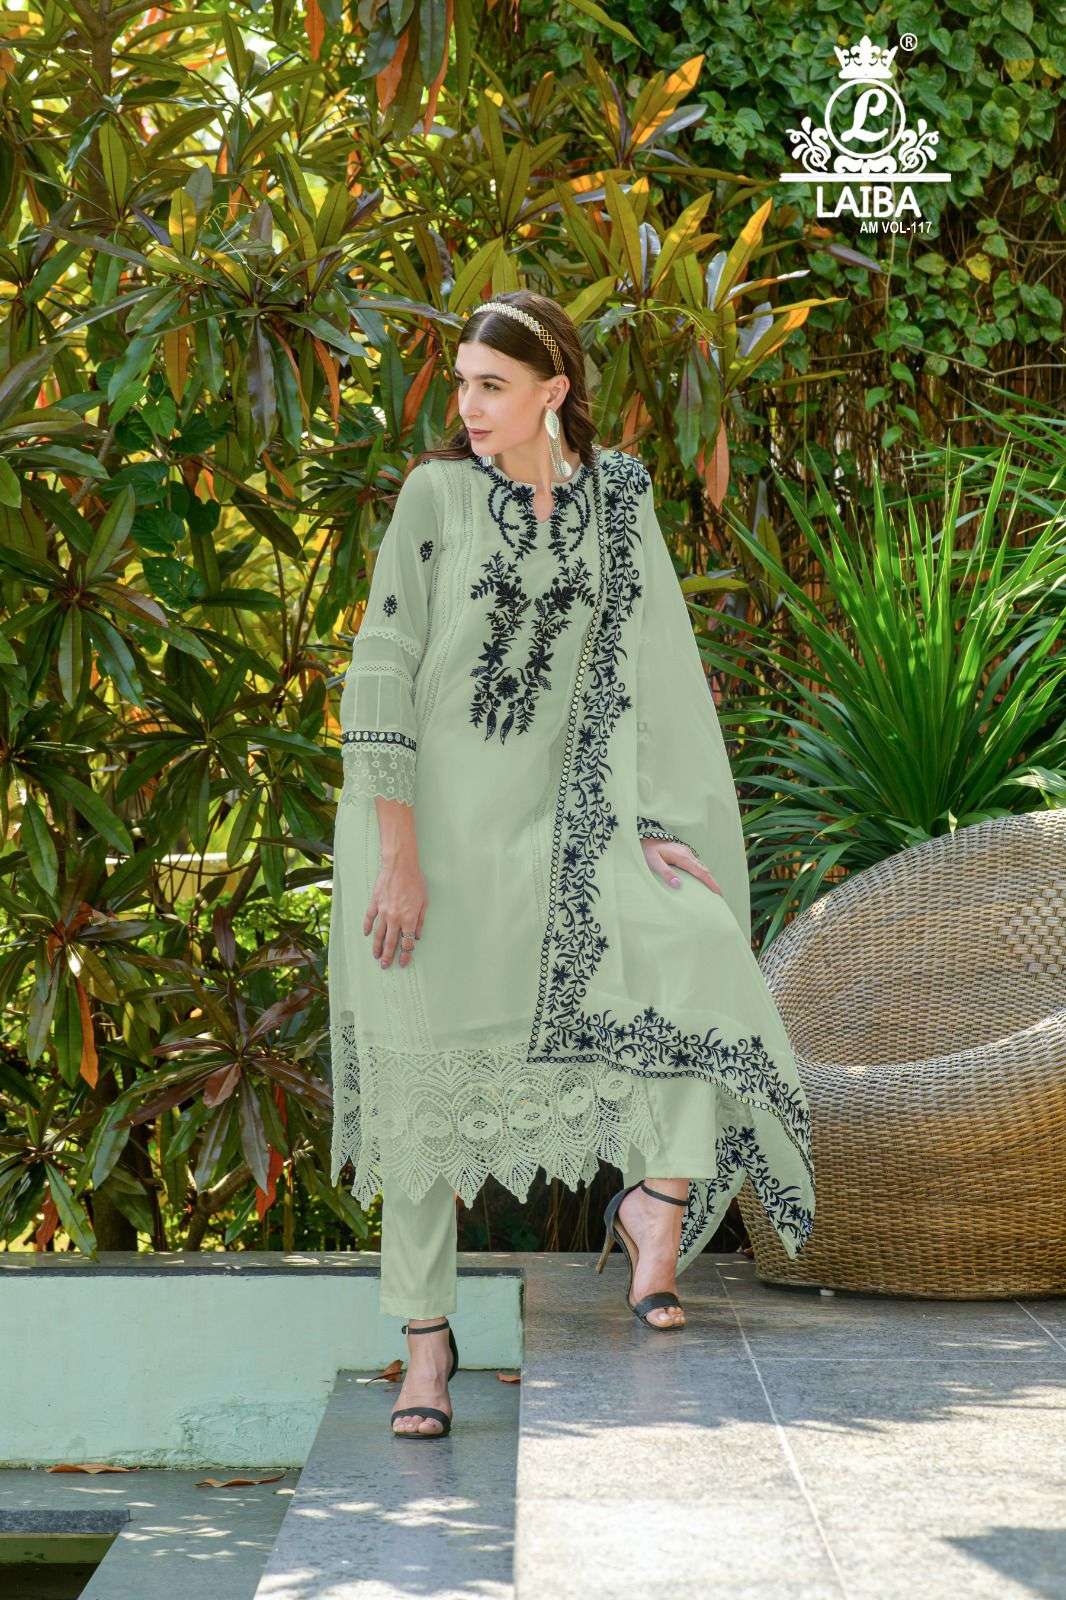 laiba am vol-117 designer partywear readymade salwar kameez wholesaler surat gujarat